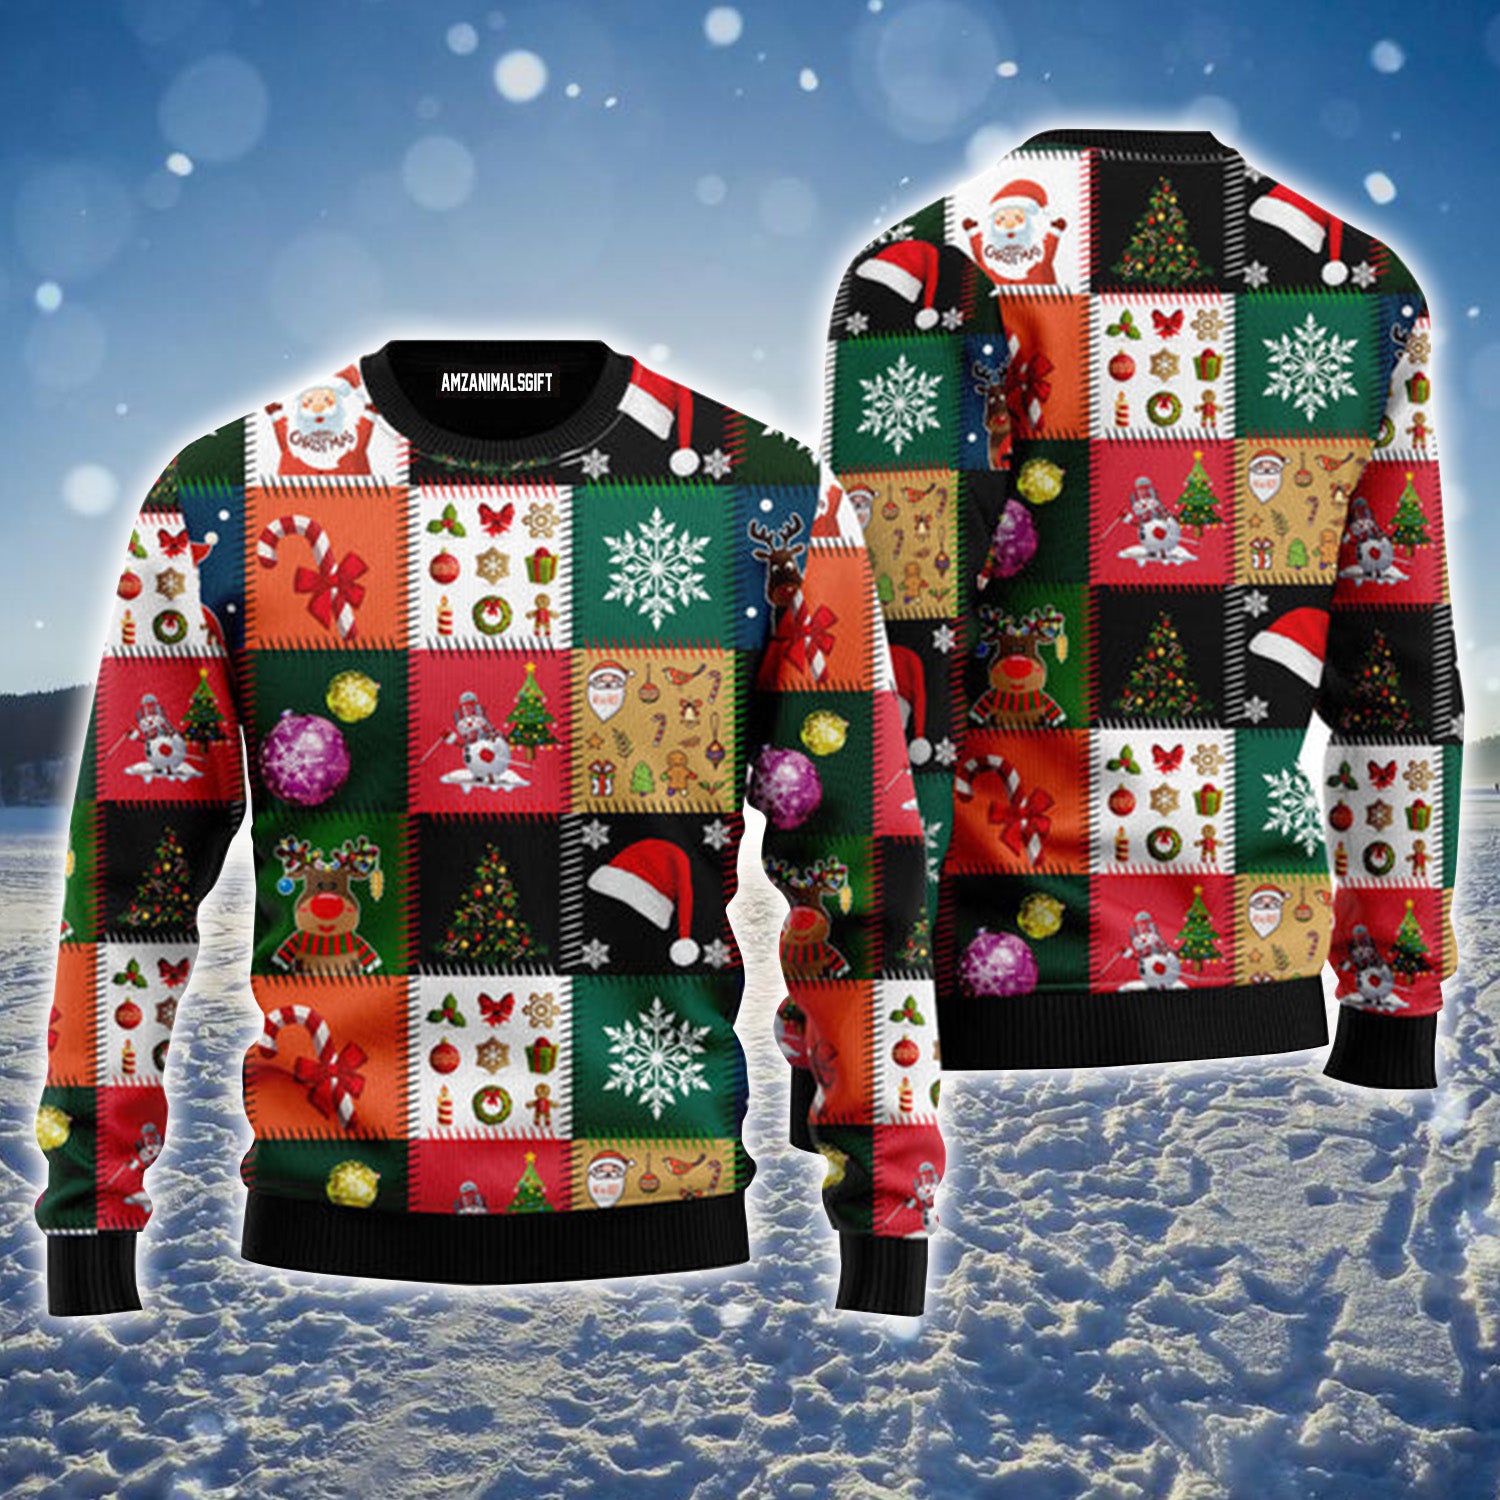 Xmas Fancy Pattern Urly Christmas Sweater, Christmas Sweater For Men & Women - Perfect Gift For Christmas, New Year, Winter Holiday